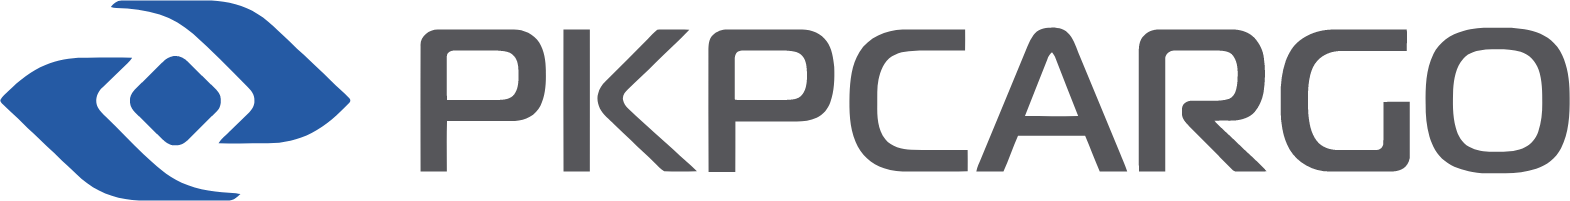 Pkp Cargo logo large (transparent PNG)